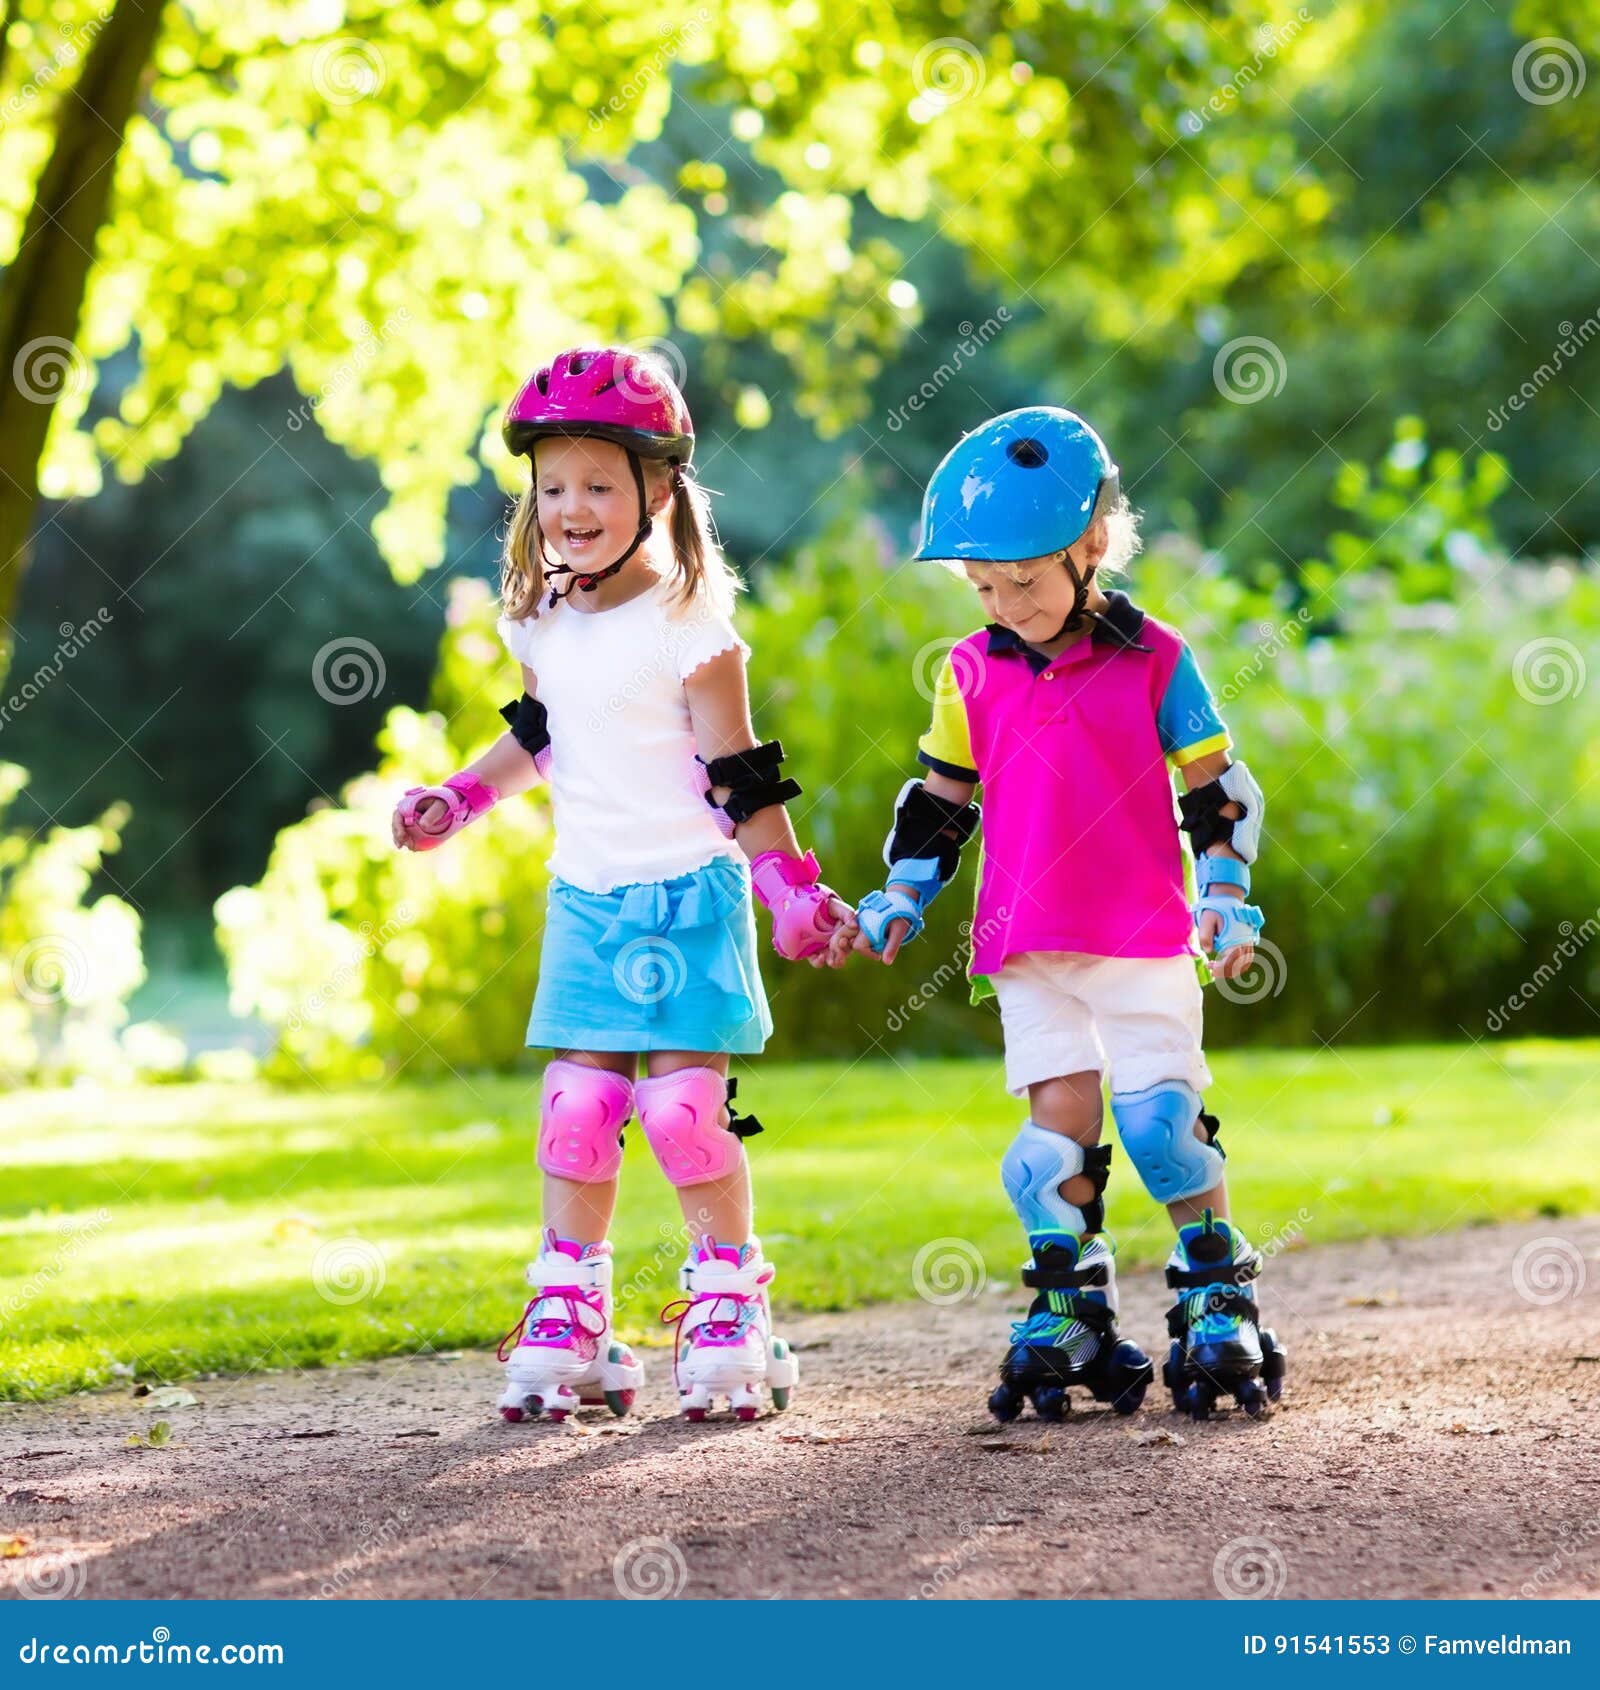 Kids Roller Skating In Summer Park Stock Image Image of